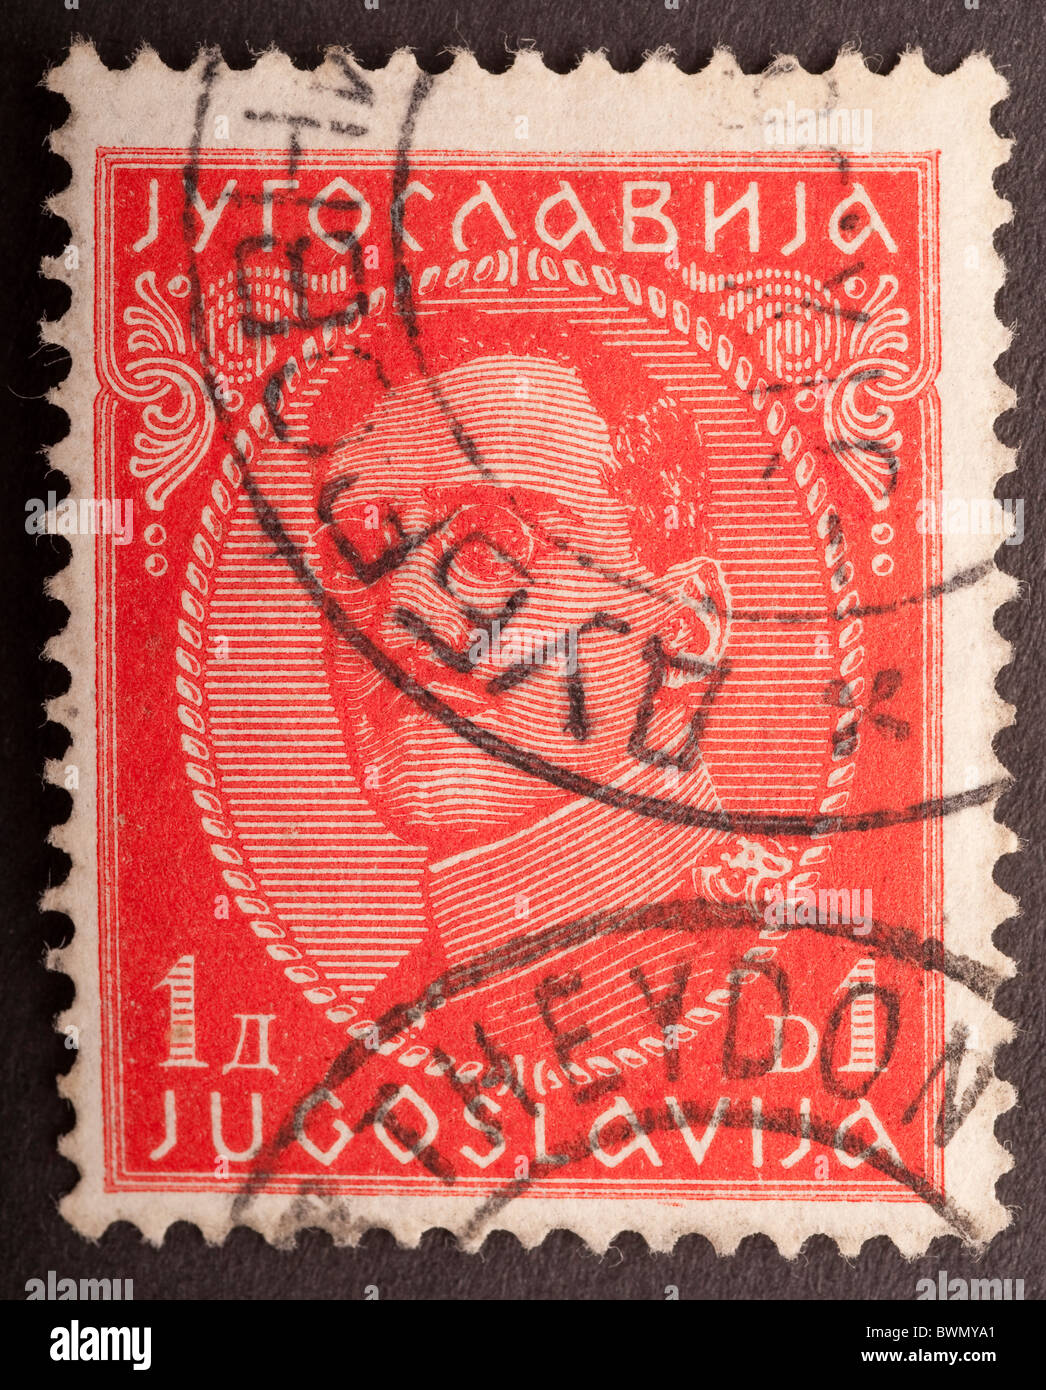 Yugoslavia Postage Stamp Stock Photo